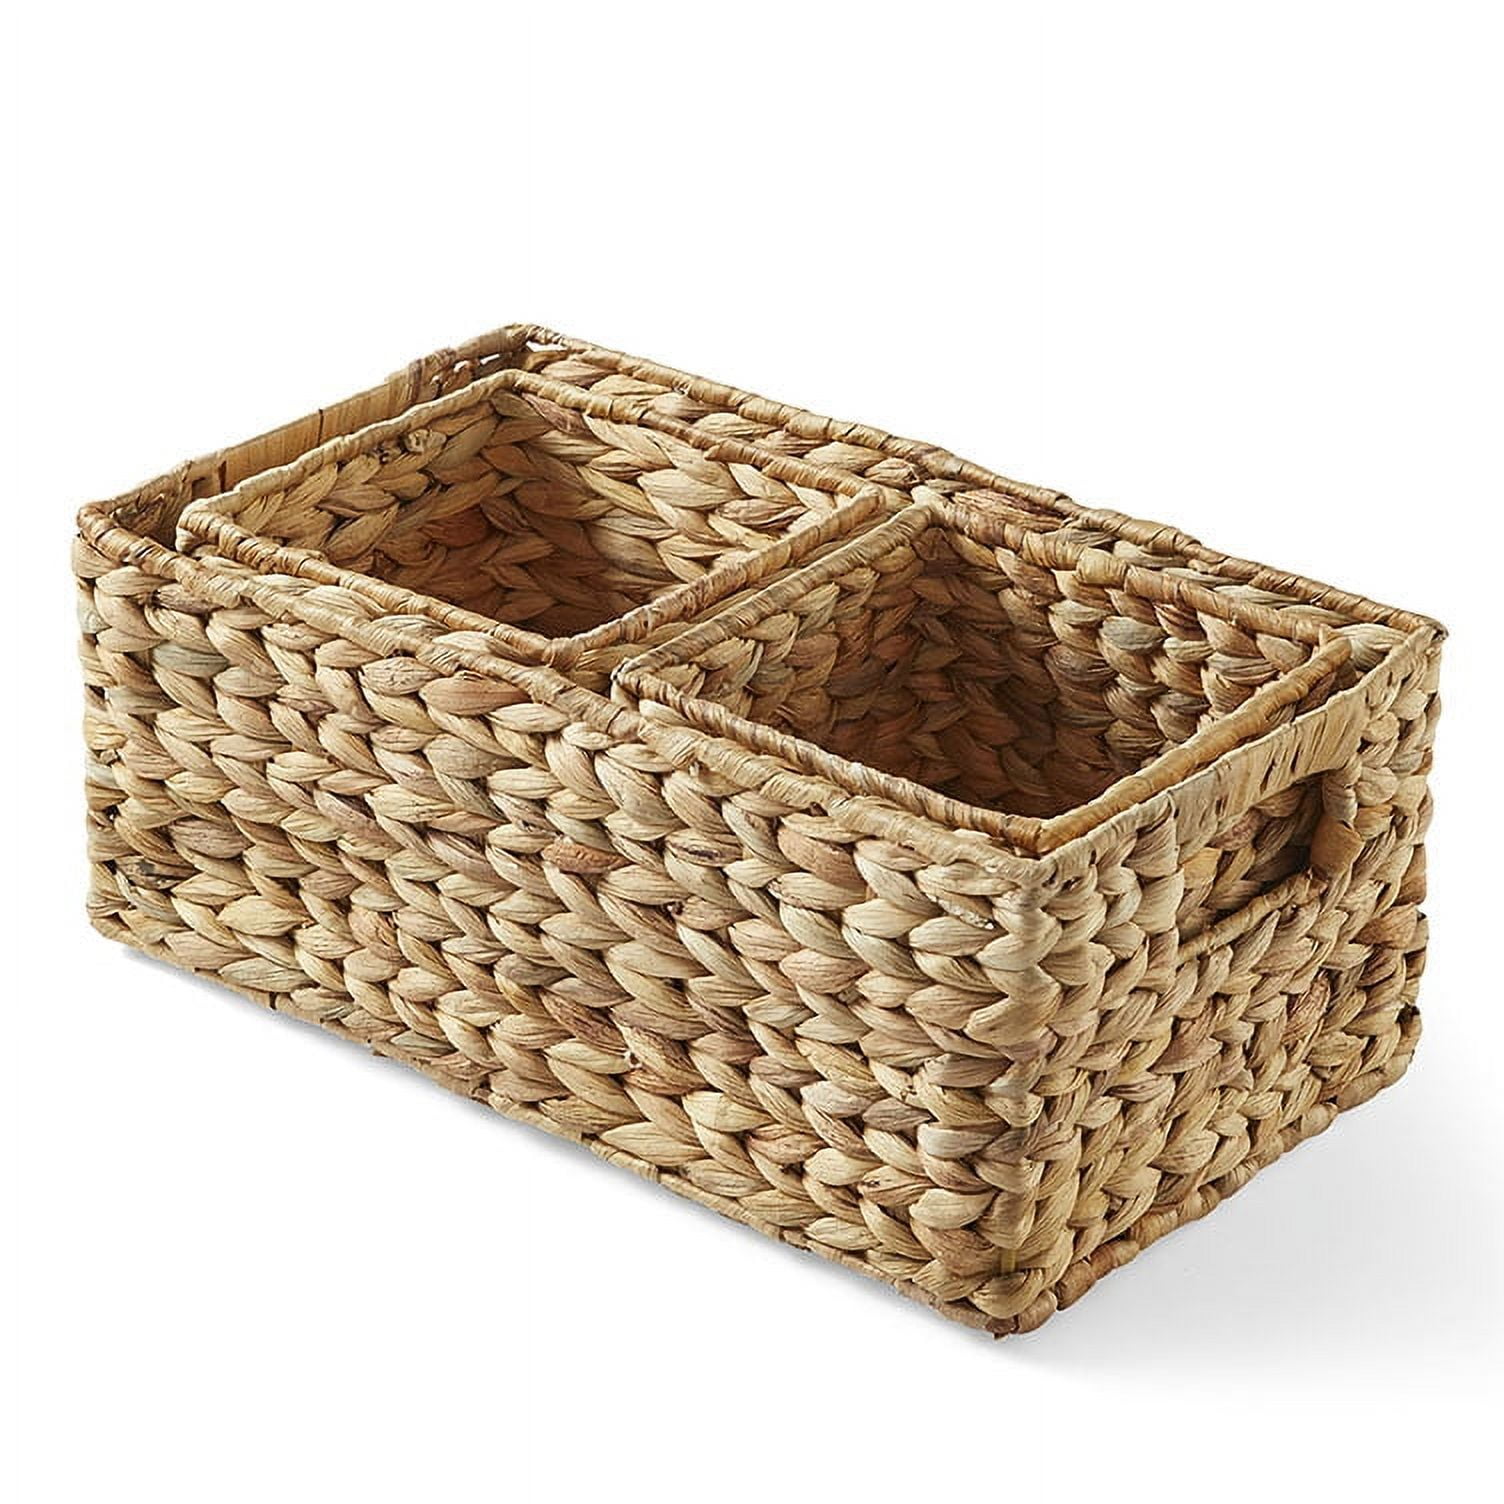 Casafield 12 X 12 Water Hyacinth Storage Baskets, Natural - Set